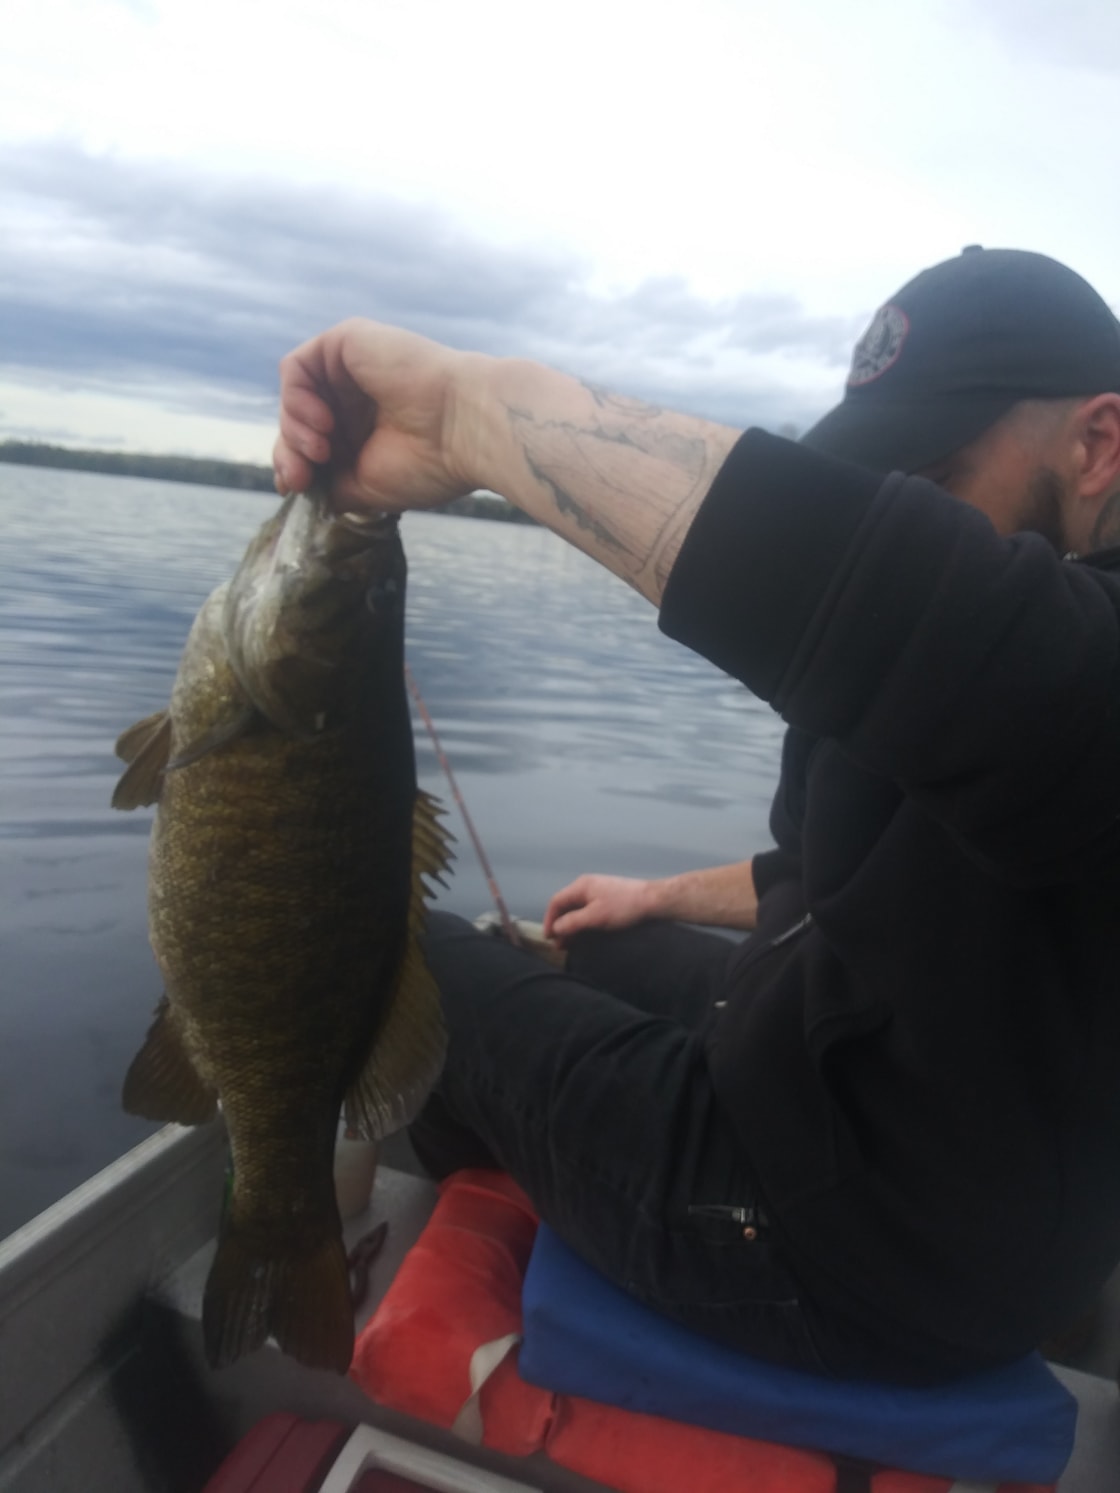 Bass caught on 5/19/19